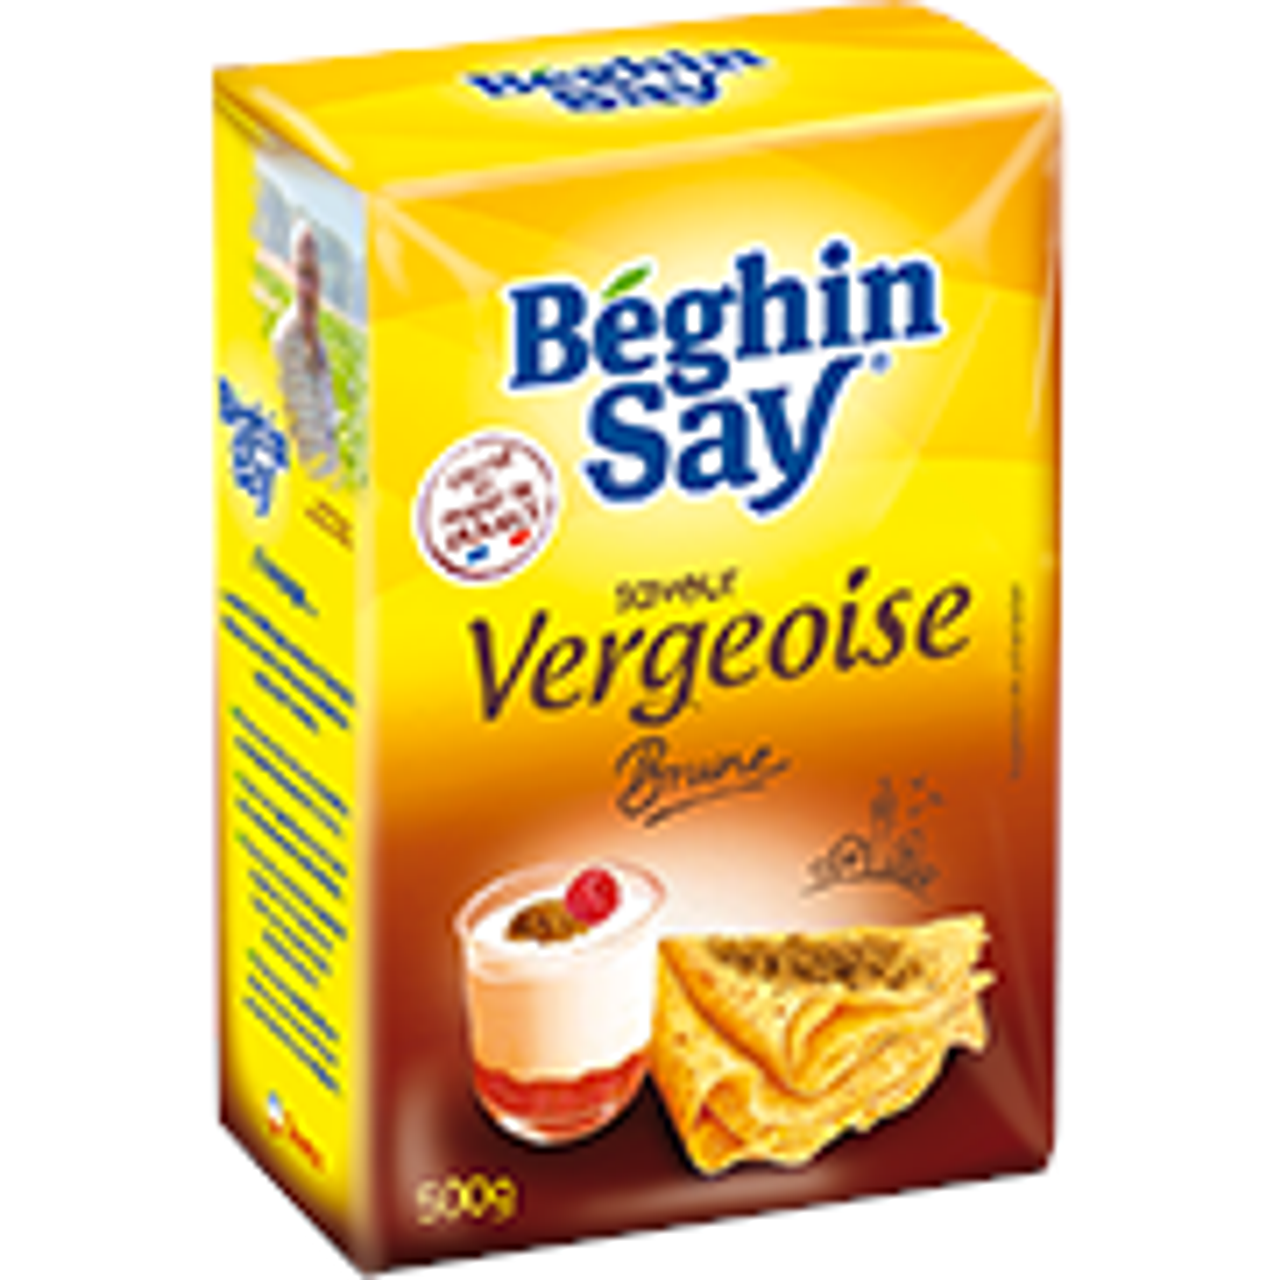 Béghin Say Brown Vergeoise (Dark Caramelized Beet Sugar) 500g